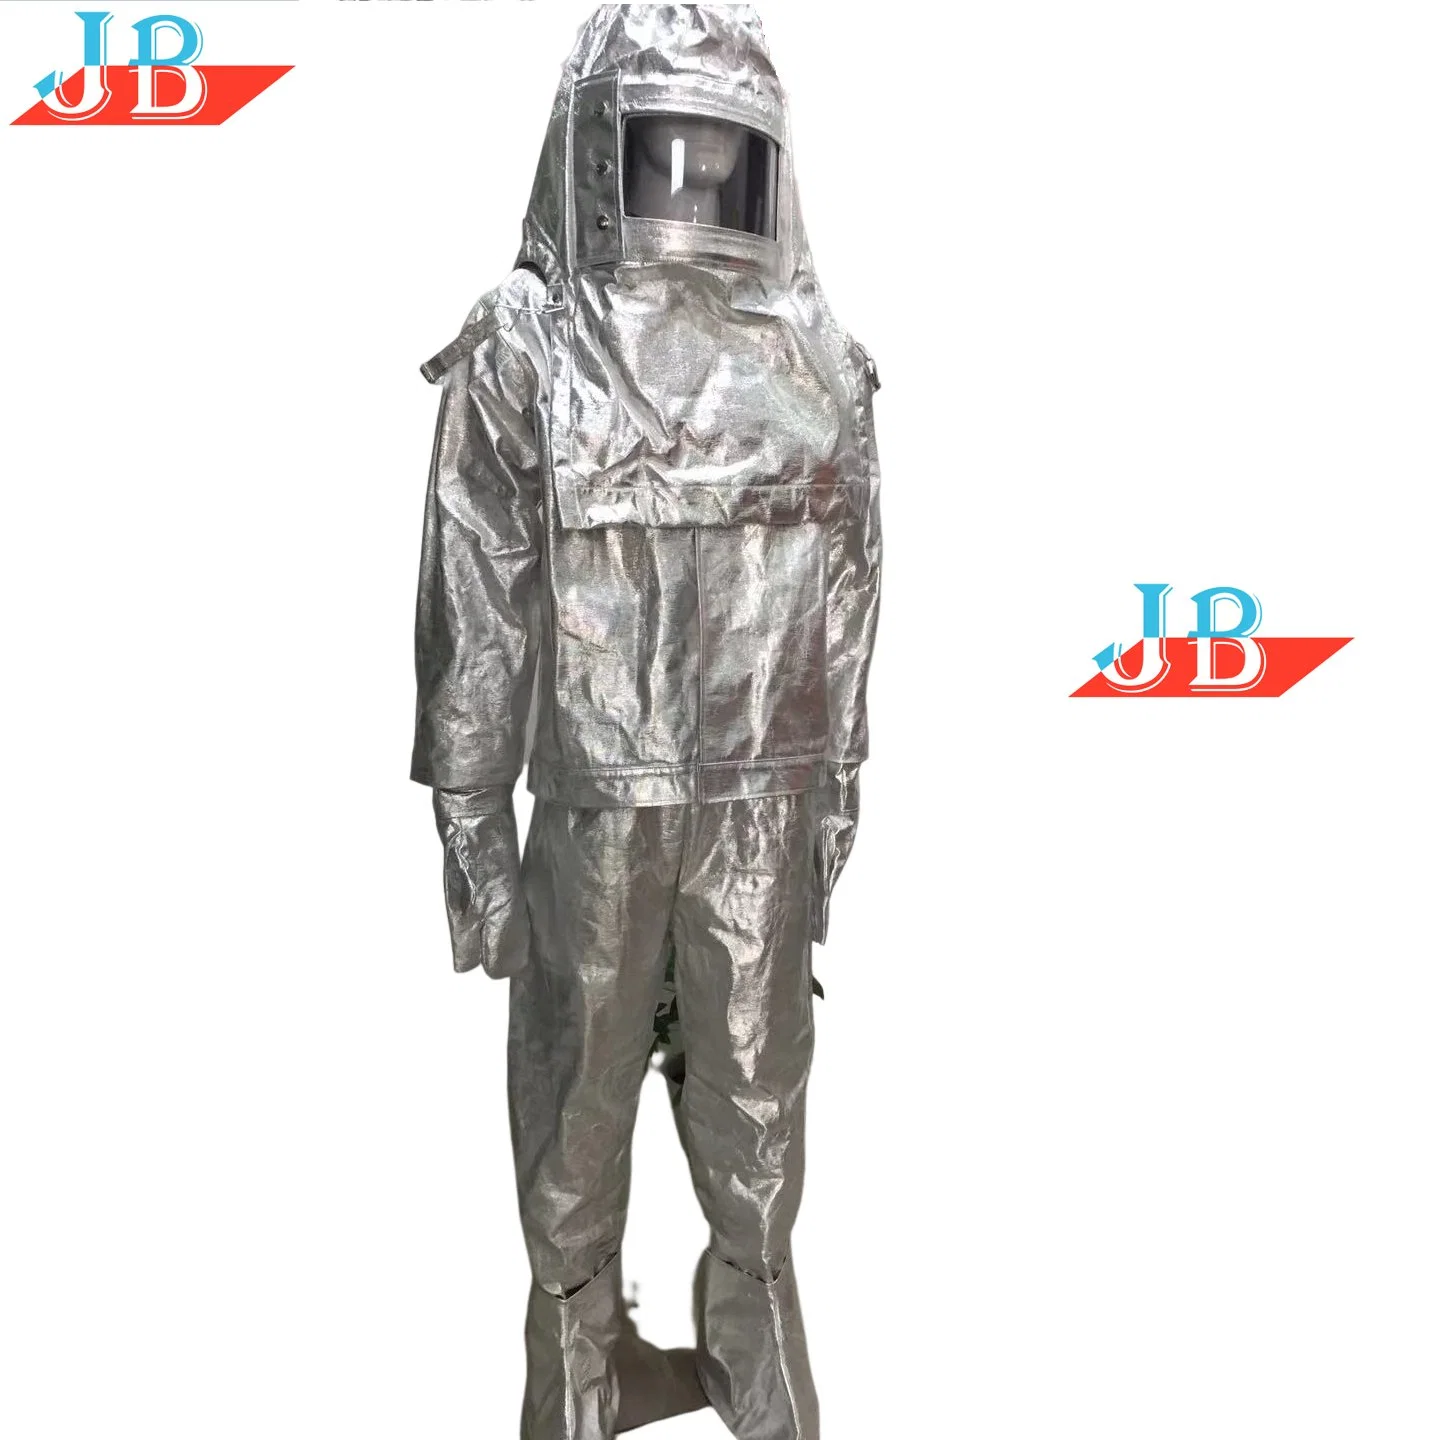 Aluminisierte Folie Feuerschutzanzug Uniform Hitzebeständiger Anzug